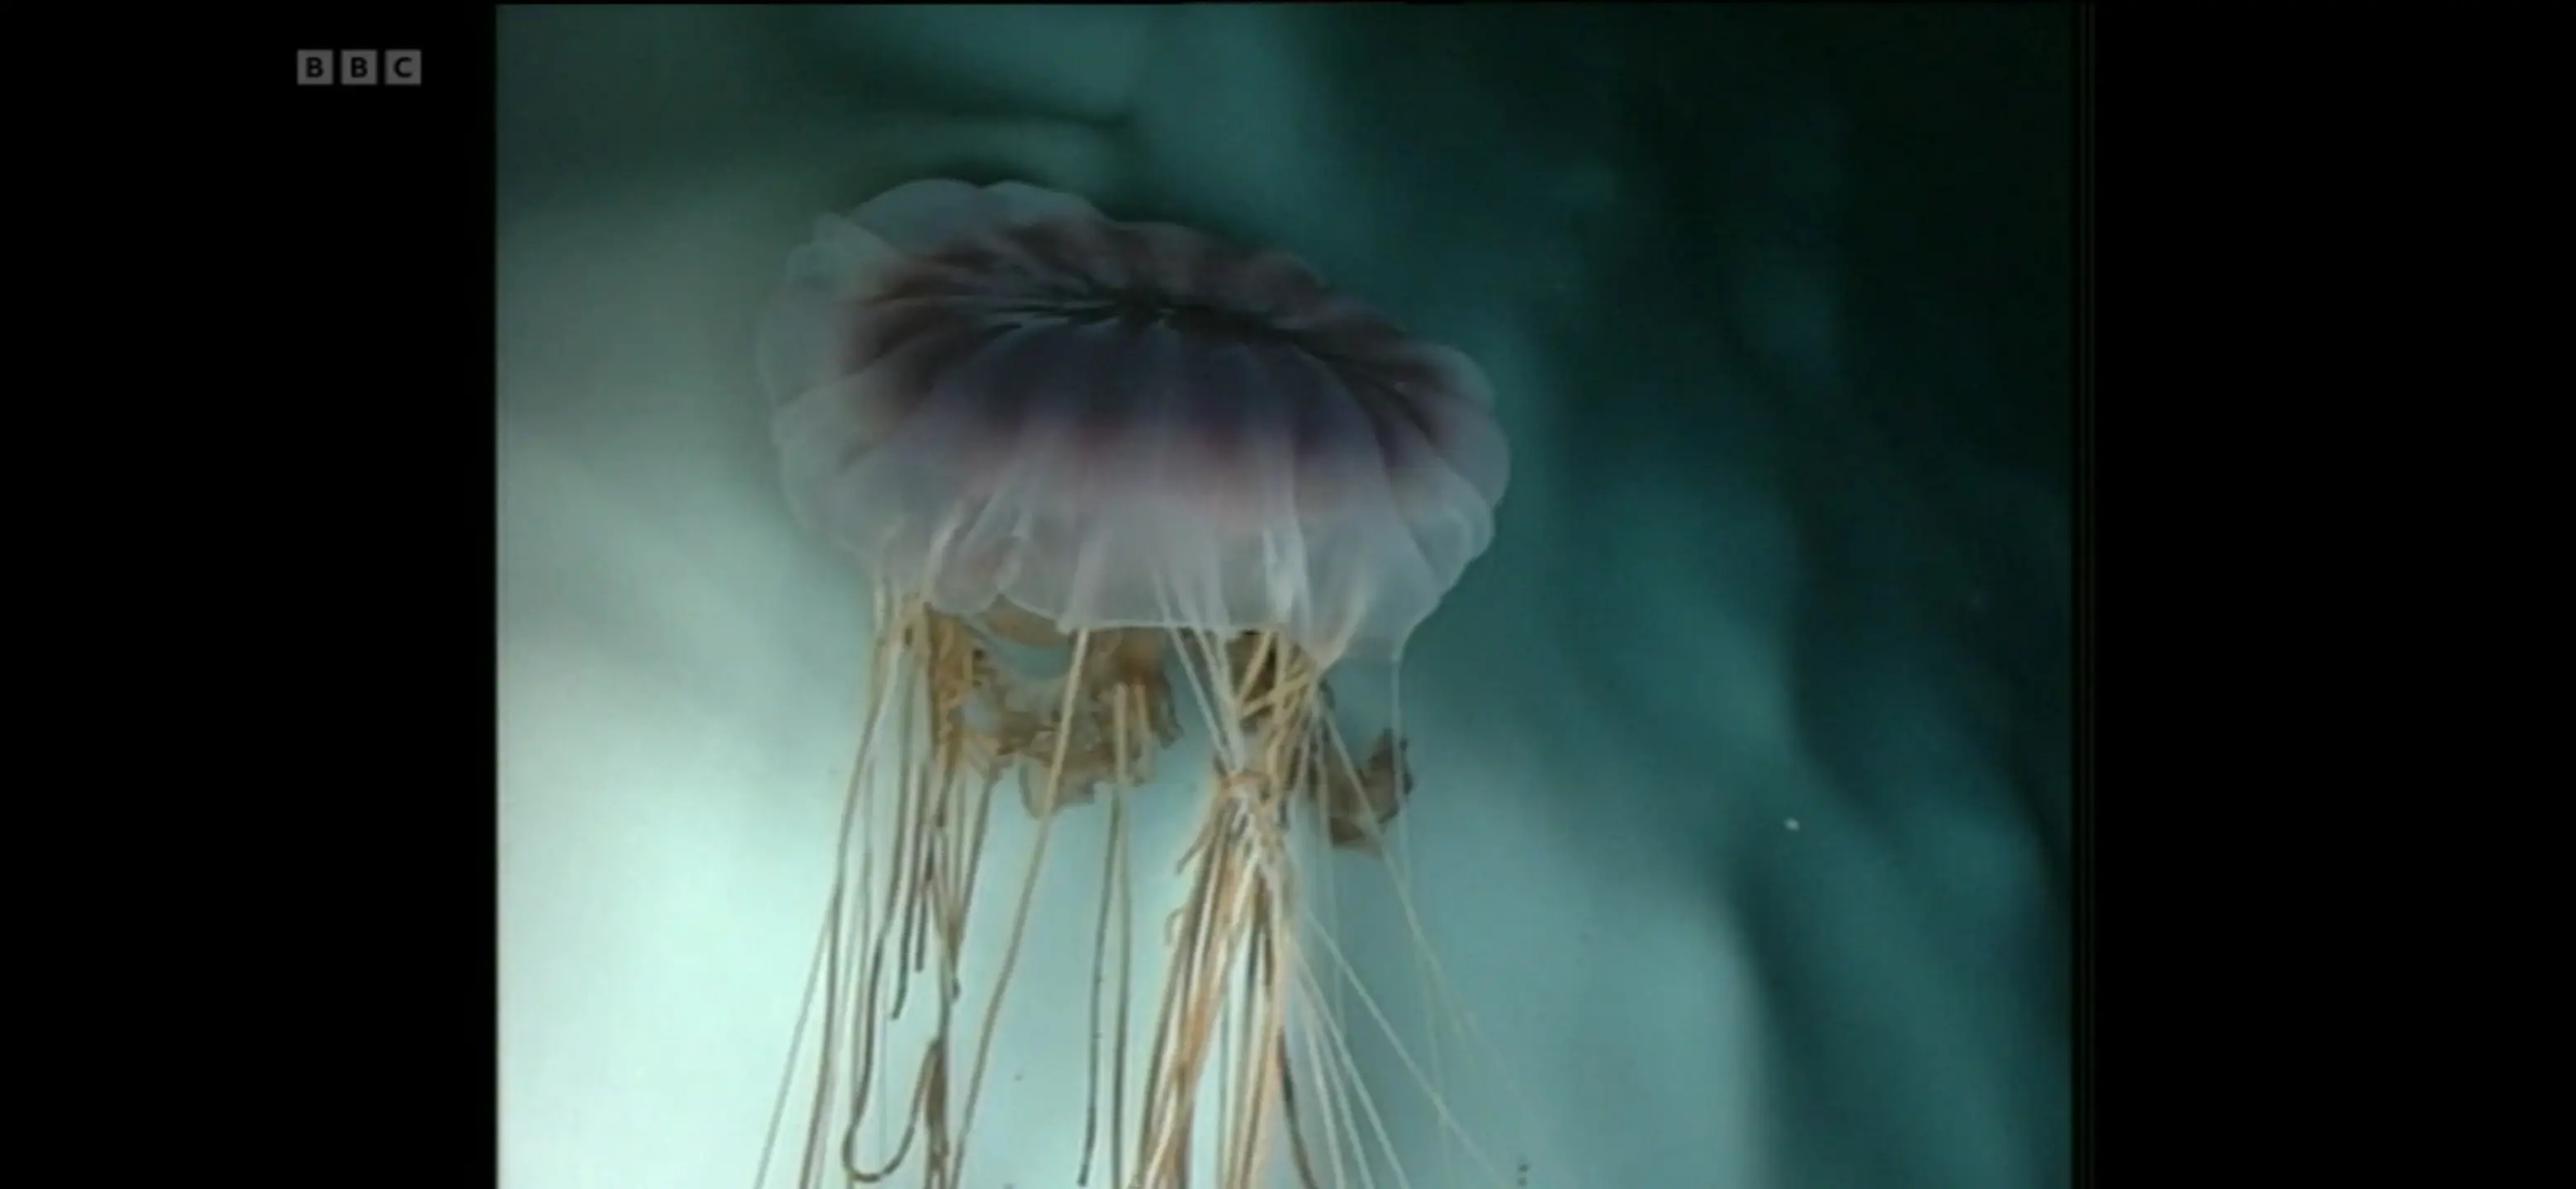 Jellyfish (Desmonema gaudichaudi) as shown in Life in the Freezer - The Big Freeze